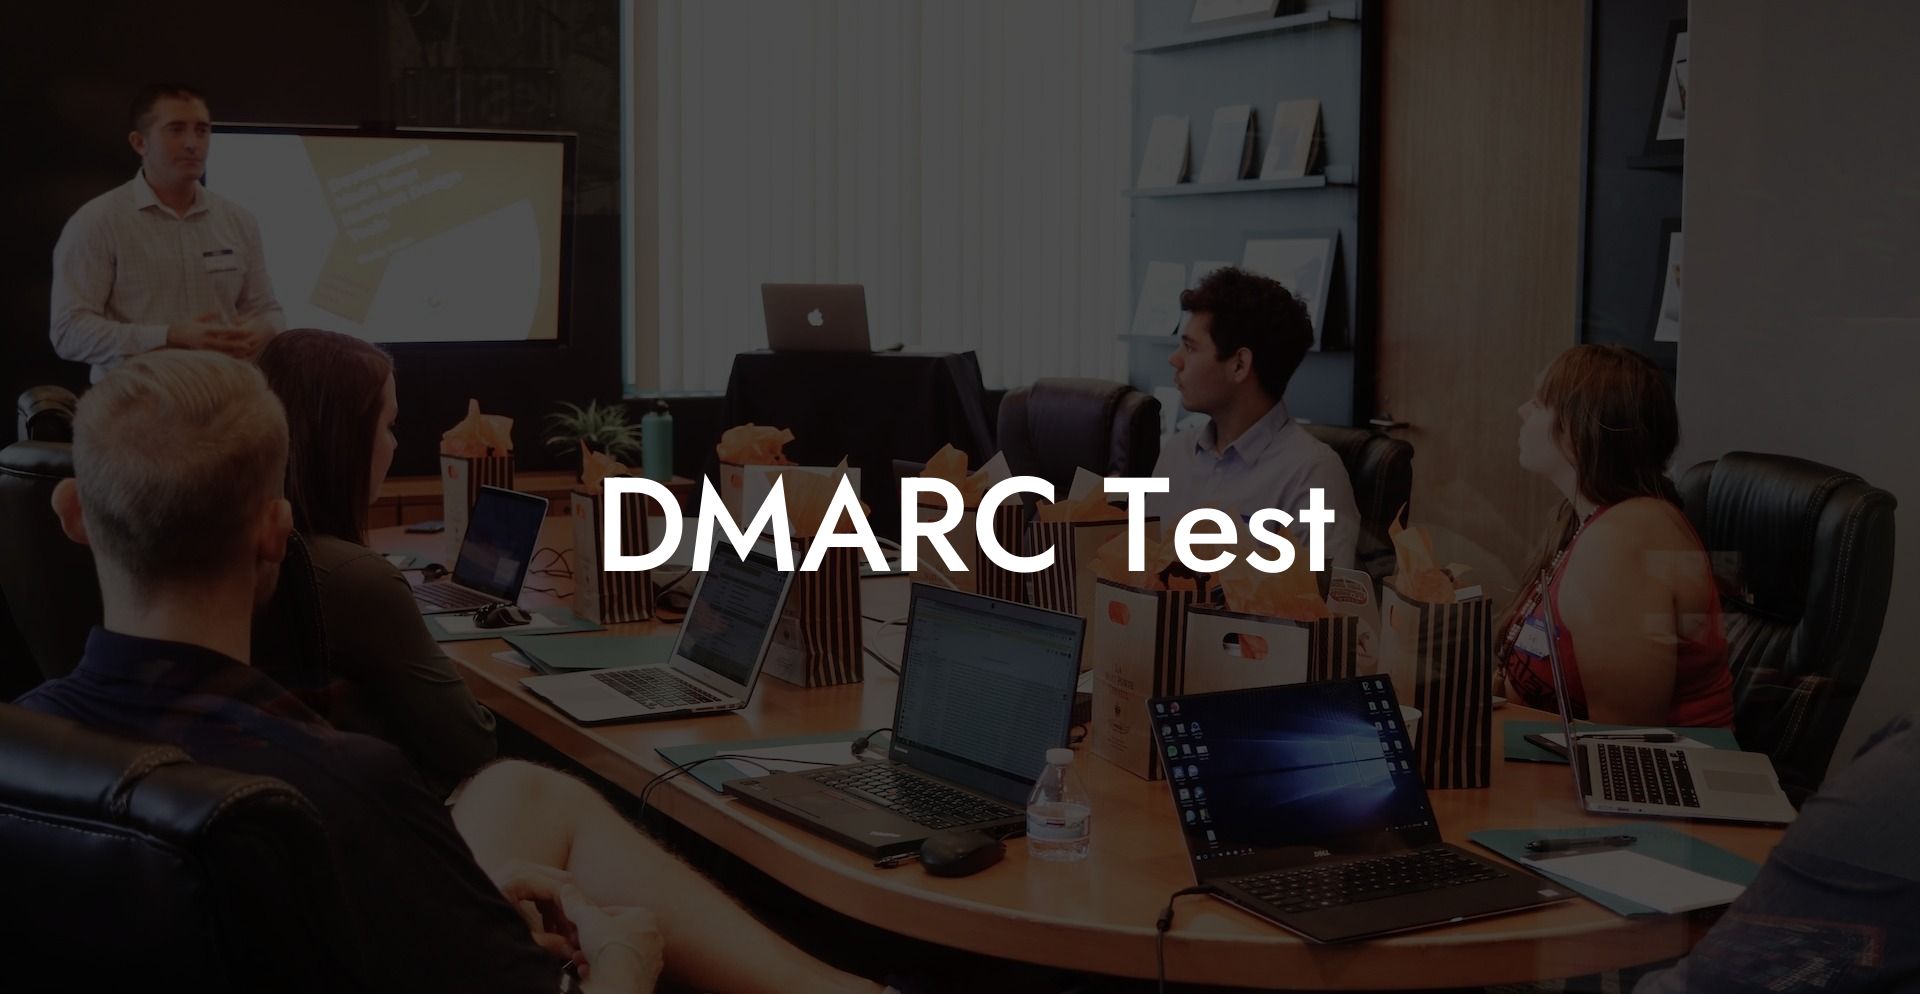 DMARC Test